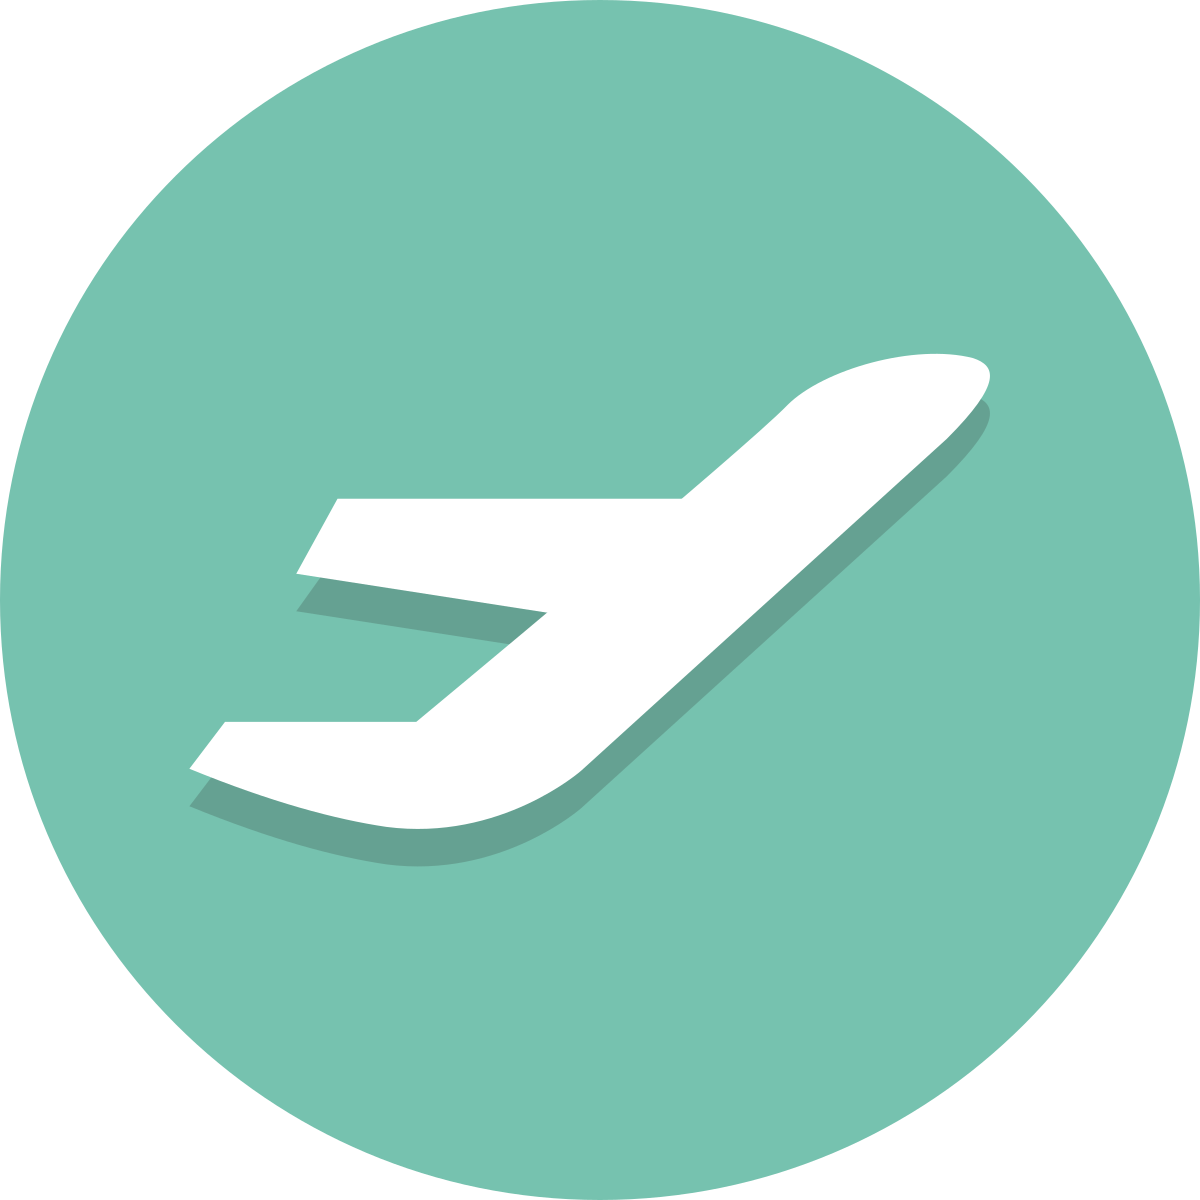 File:Circle-icons-takeoff.svg - Wikipedia